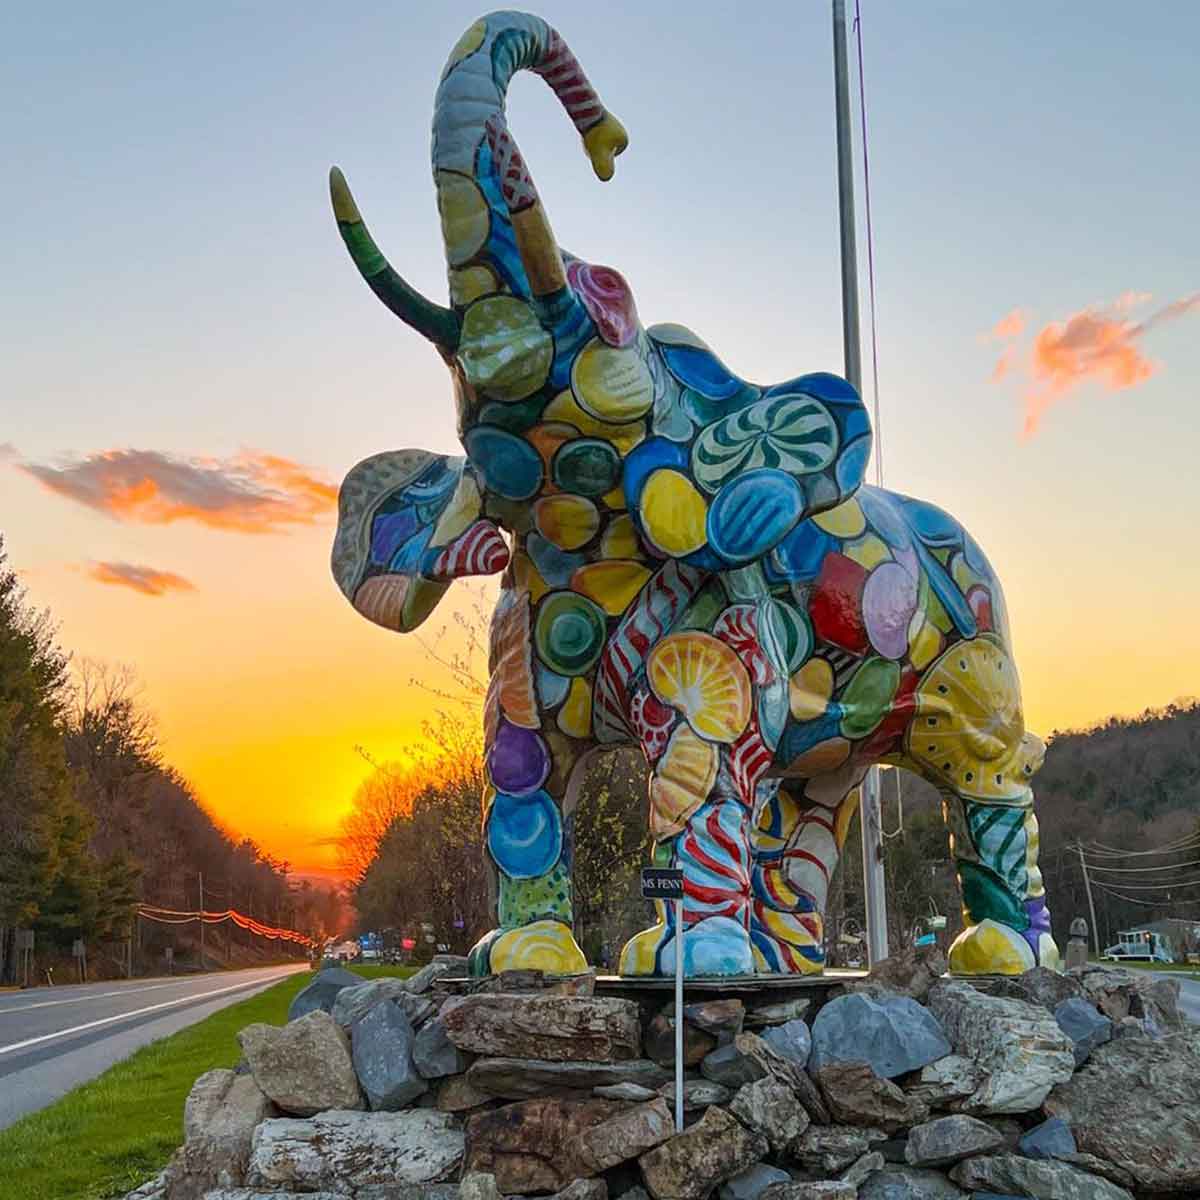 Pennsylvania – Mister Ed's Elephant Museum